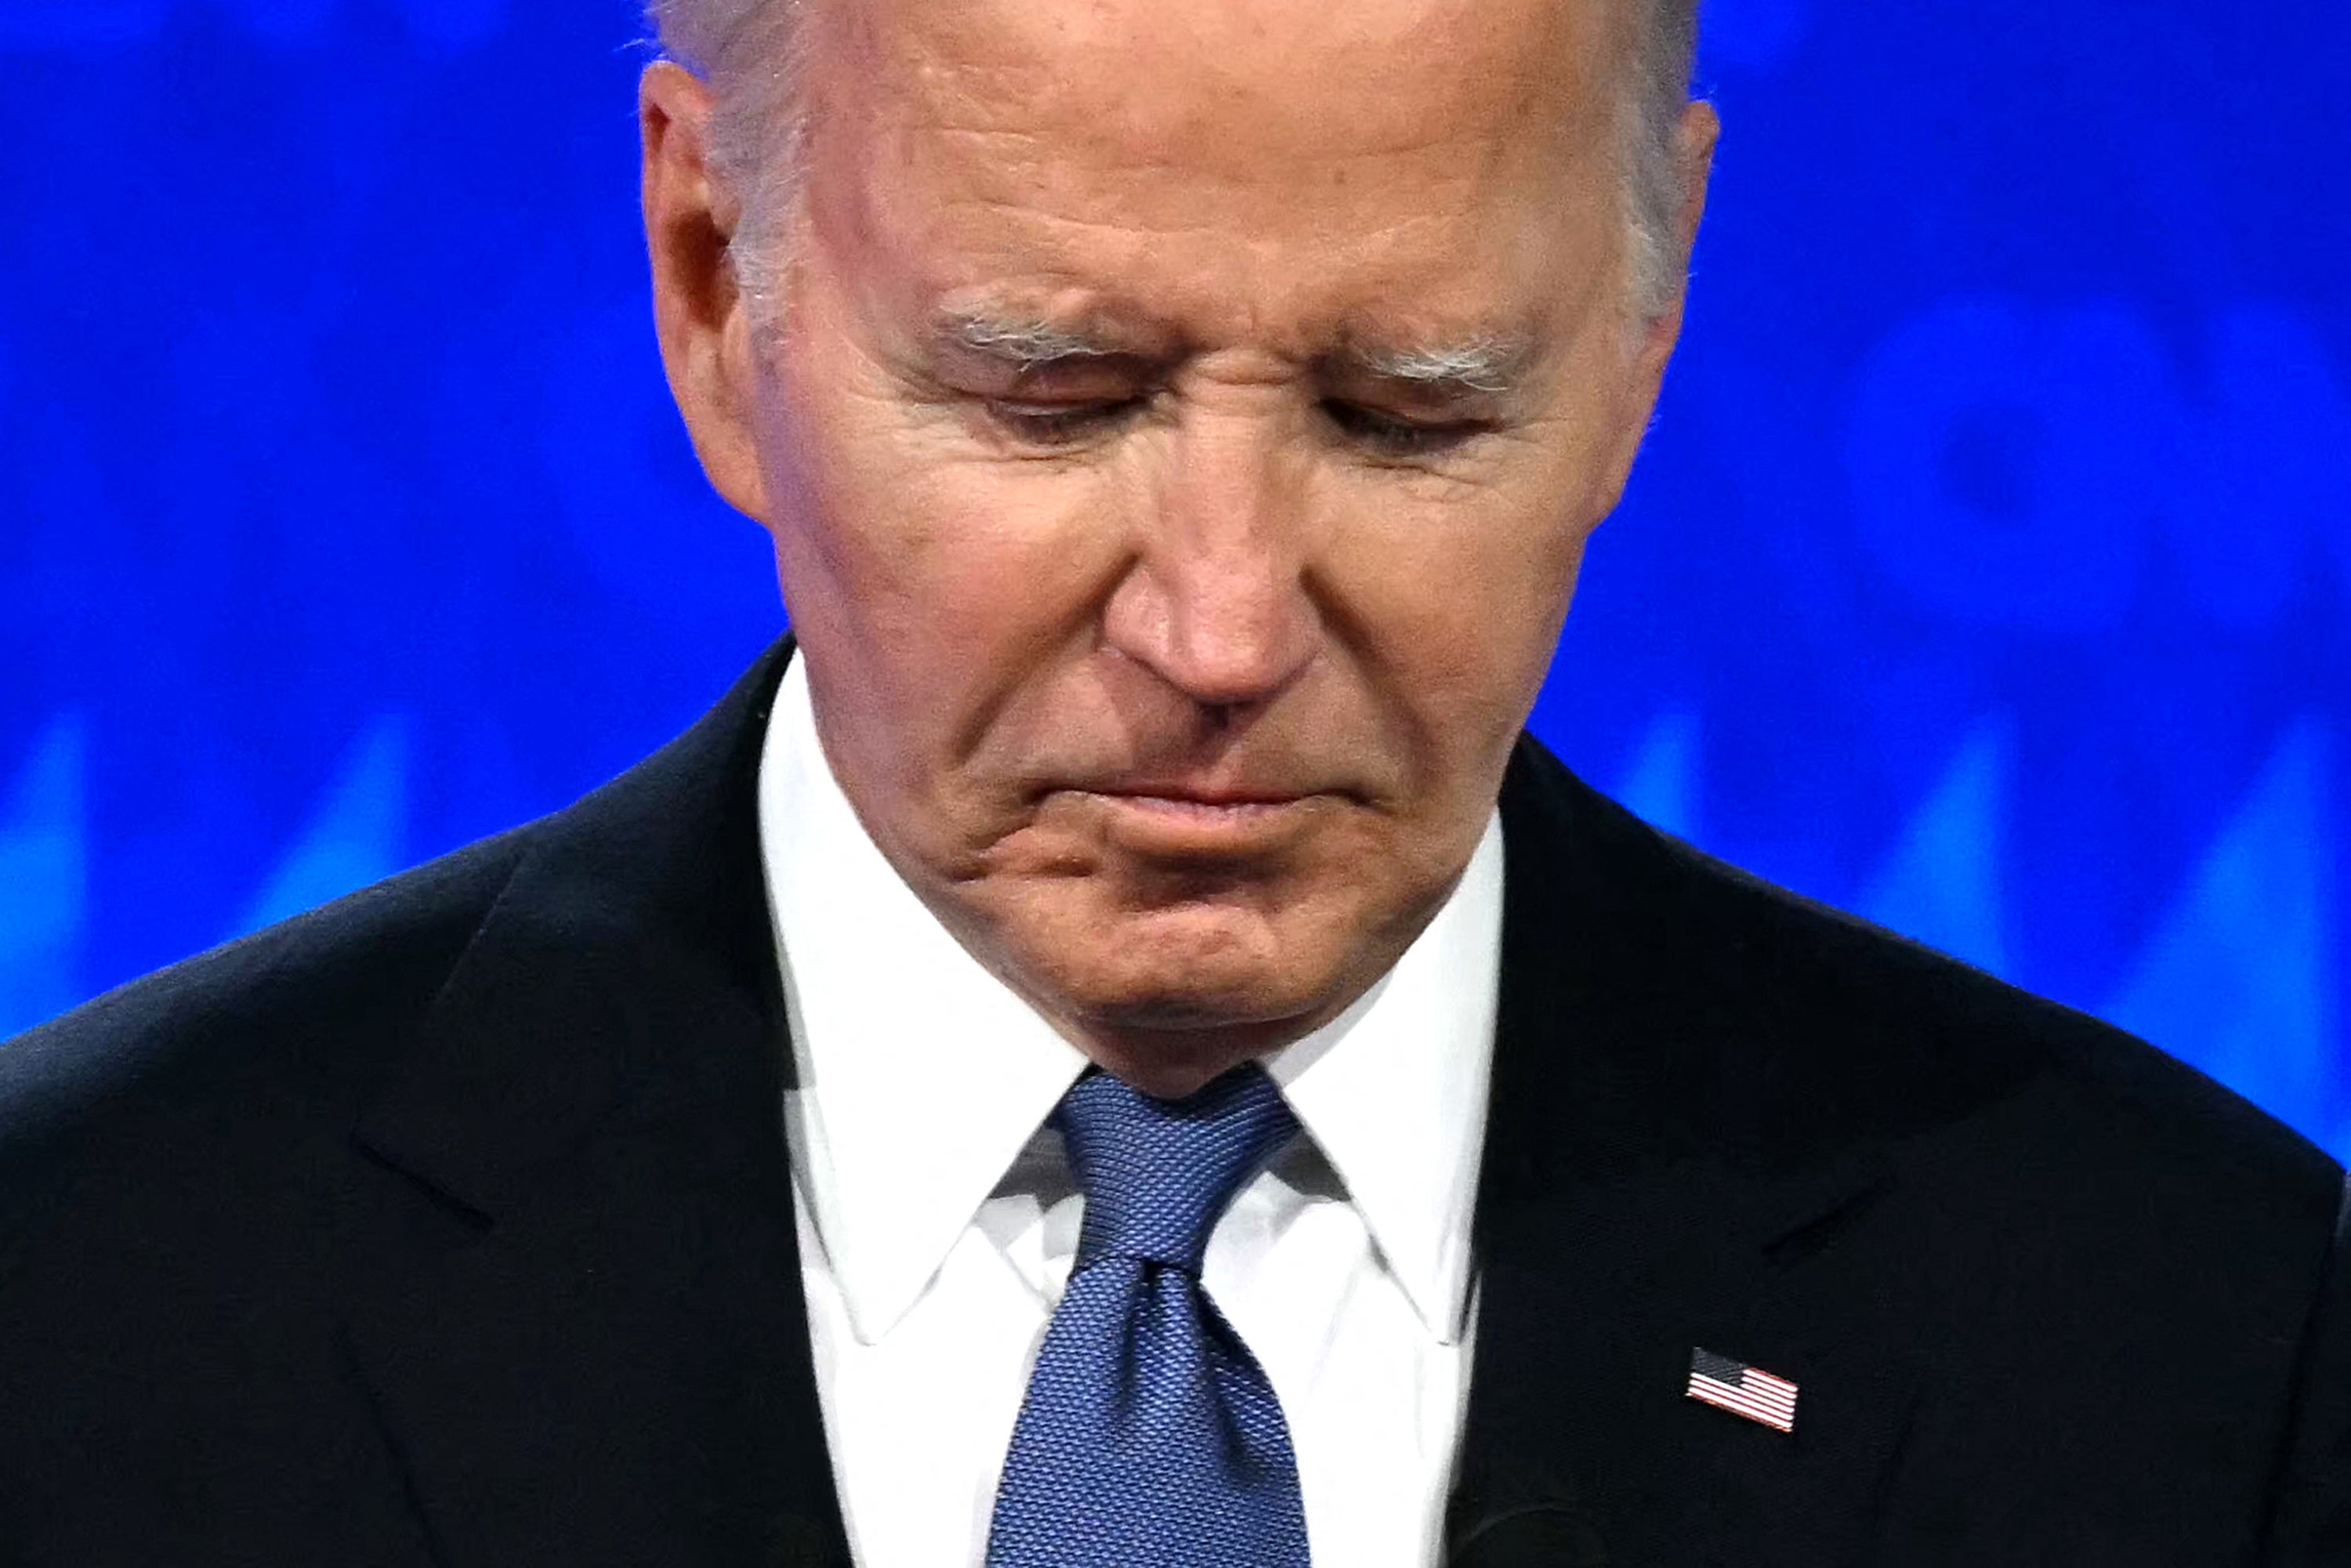 Joe Biden looks down during Thursday’s debate against Donald Trump in Atlanta, Georgia